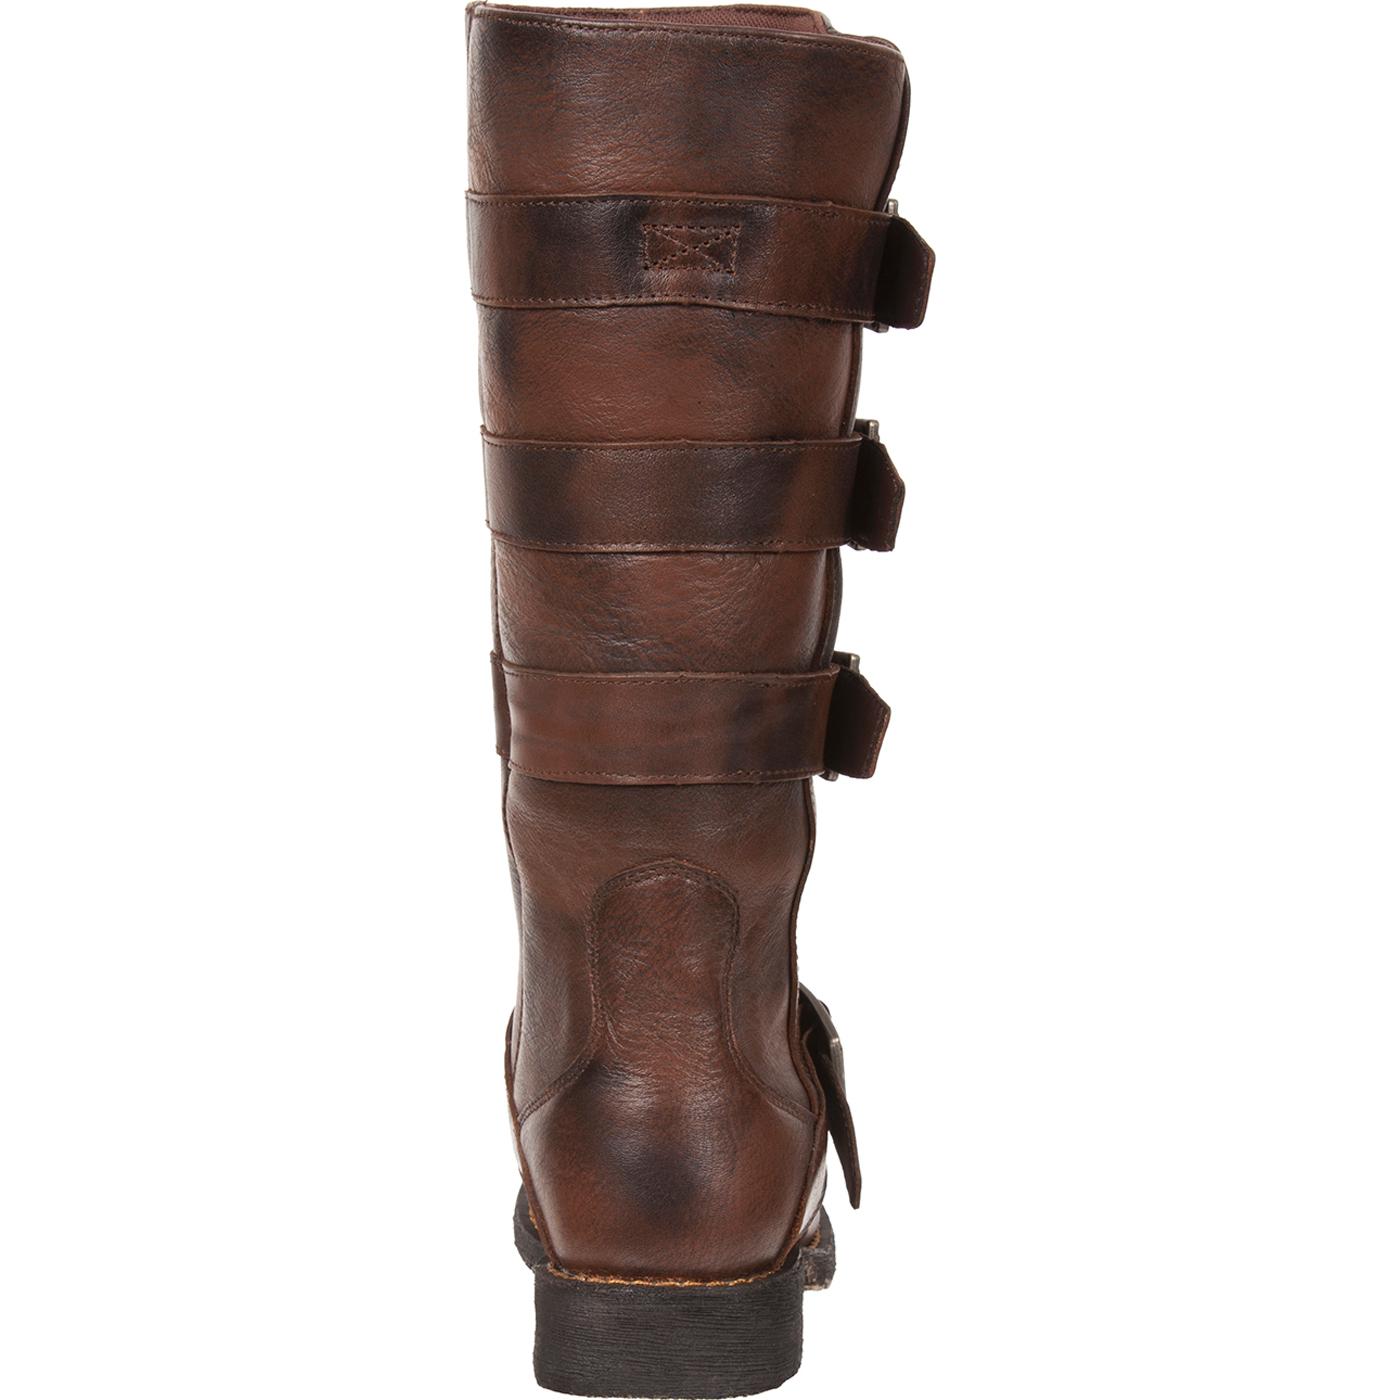 Durango City Savannah Women's Engineer Leather Boots, #RD0574